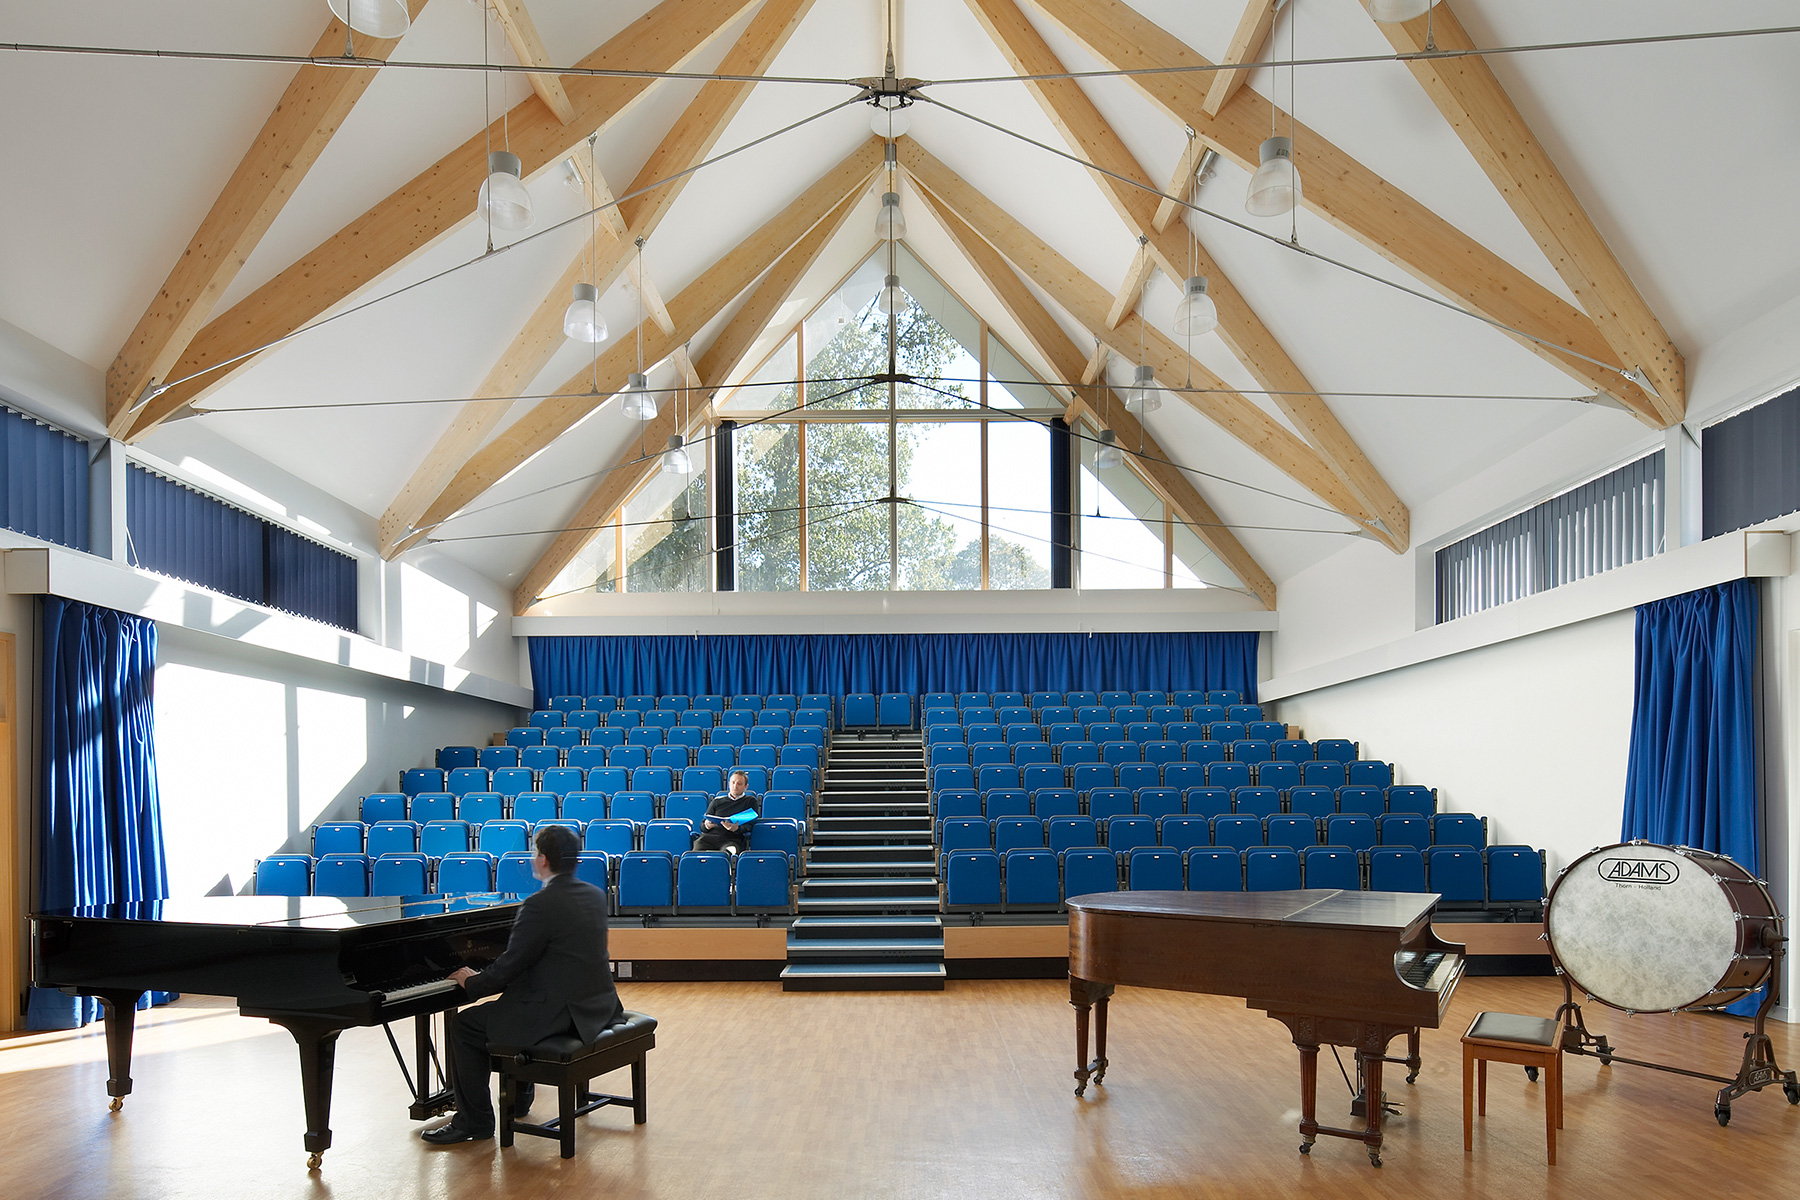 Music Department, Felsted School, Essex